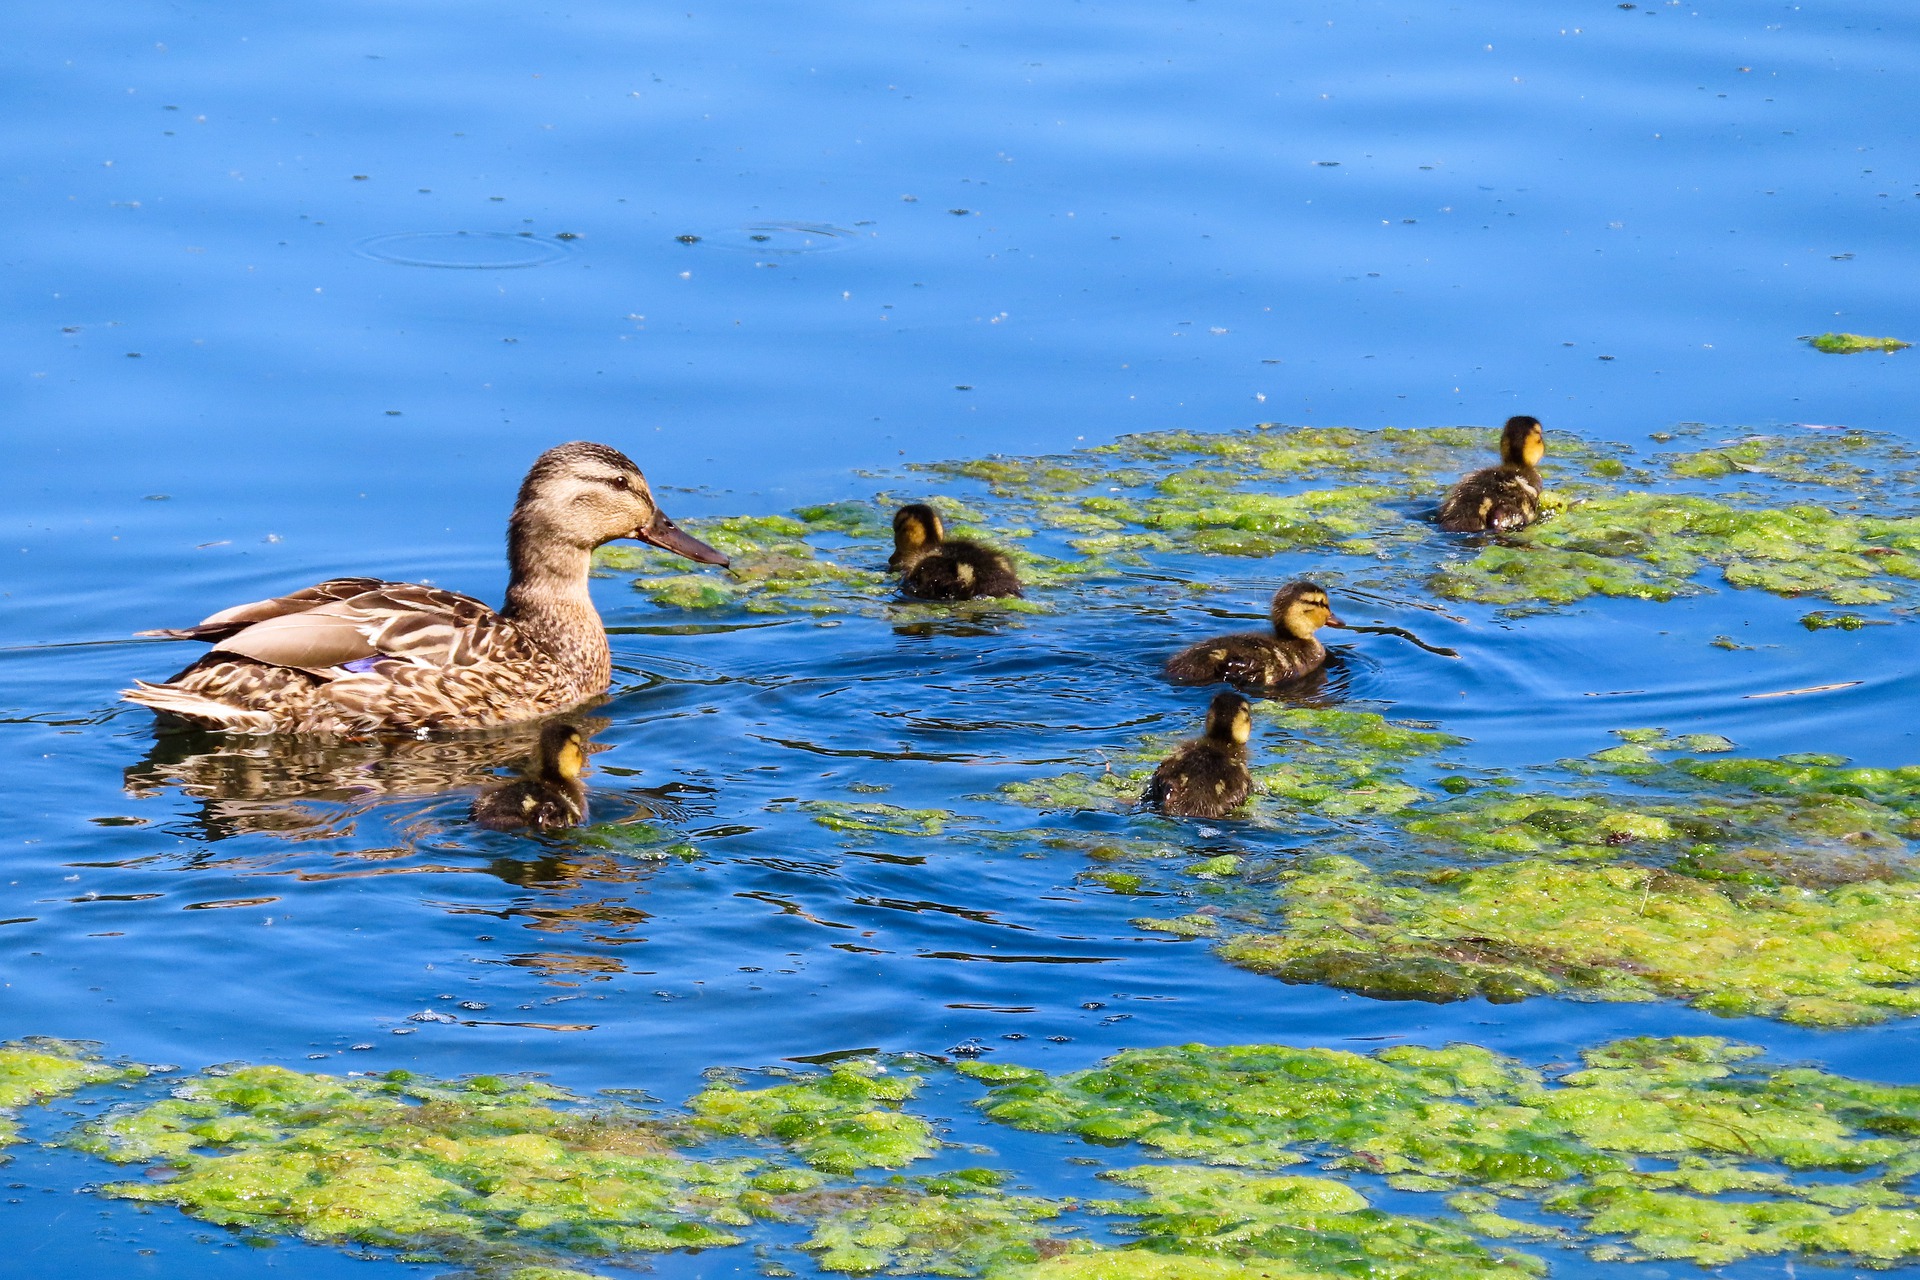 https://pixabay.com/photos/wildlife-duck-water-bird-nature-4337319/